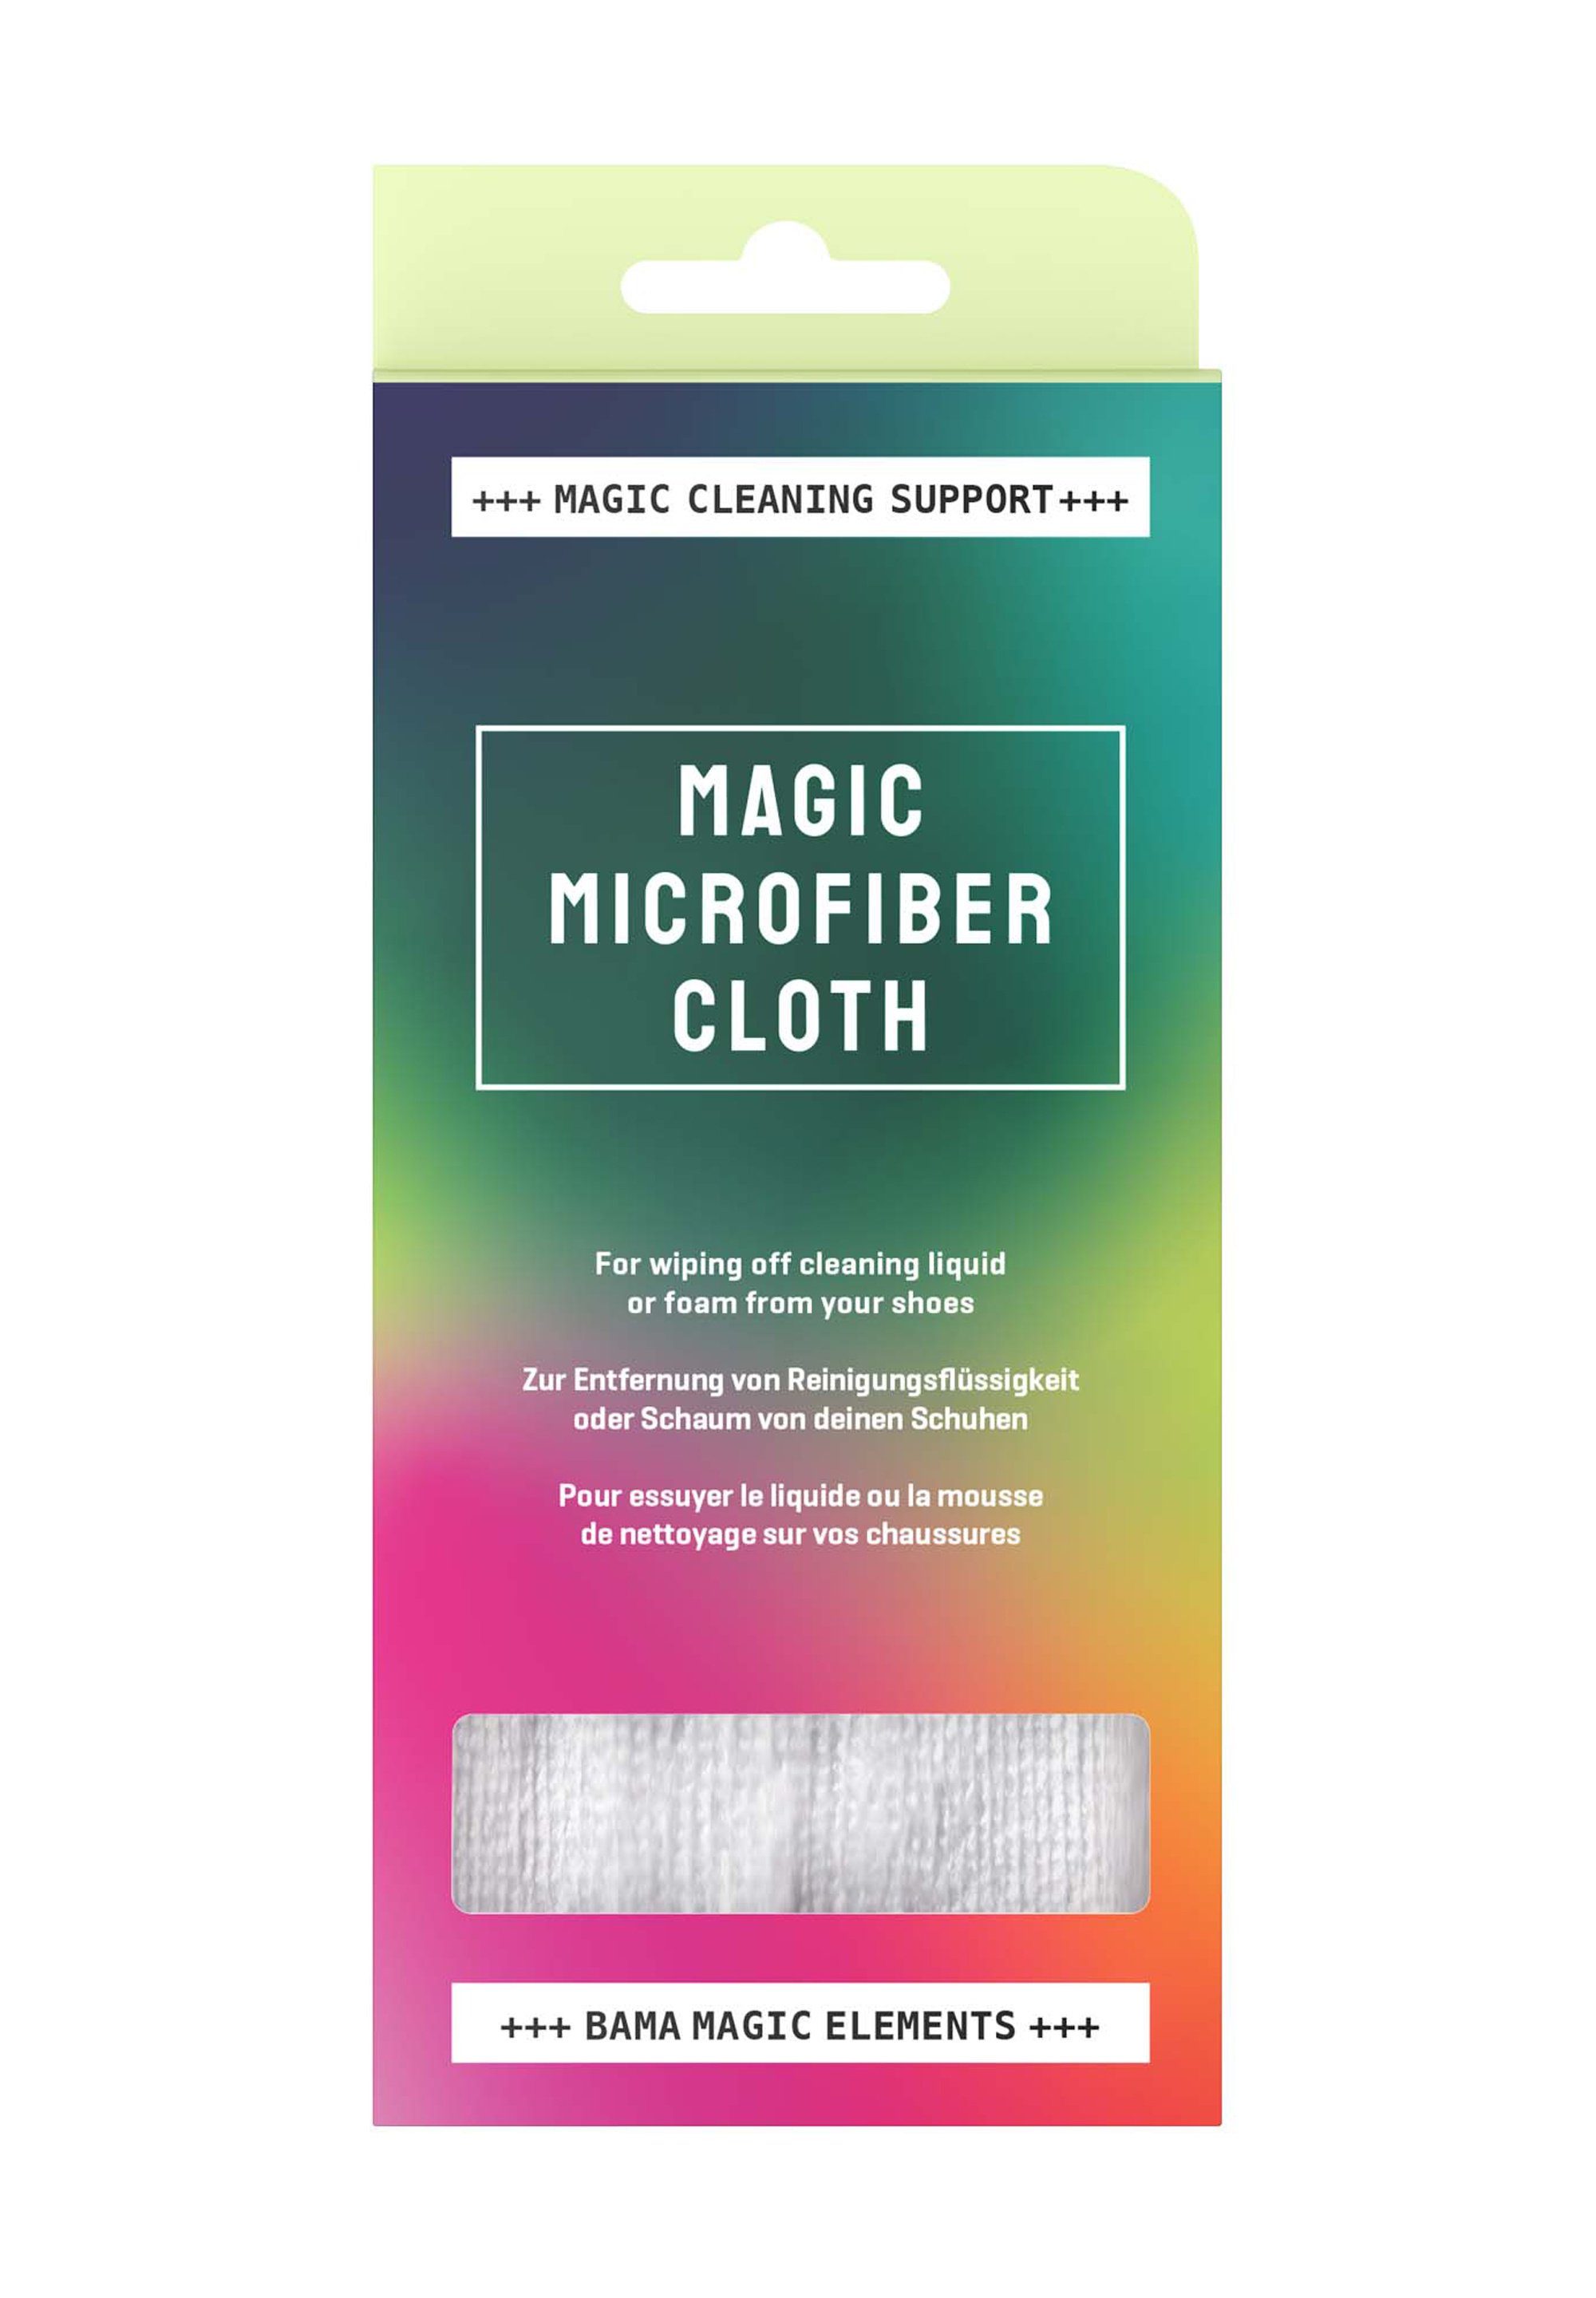 Schuhreiniger + BAMA Magic Cleaner Group + Set (1x 1x Upper Tuch Cleaning Magic Cleaner Bama Midsole Magic gratis) 1x